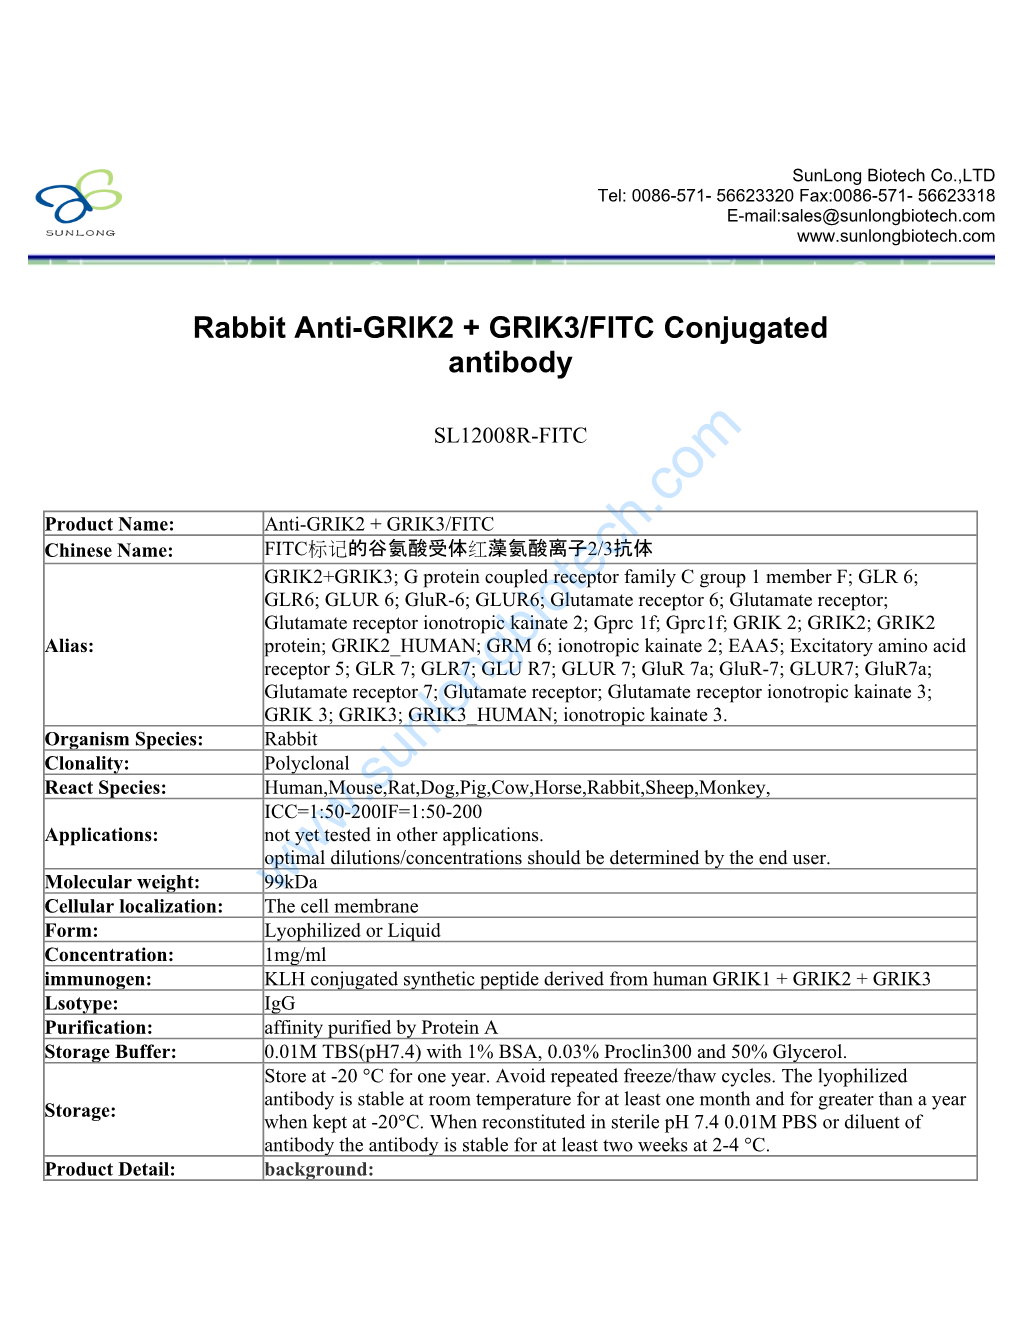 Rabbit Anti-GRIK2 + GRIK3/FITC Conjugated Antibody